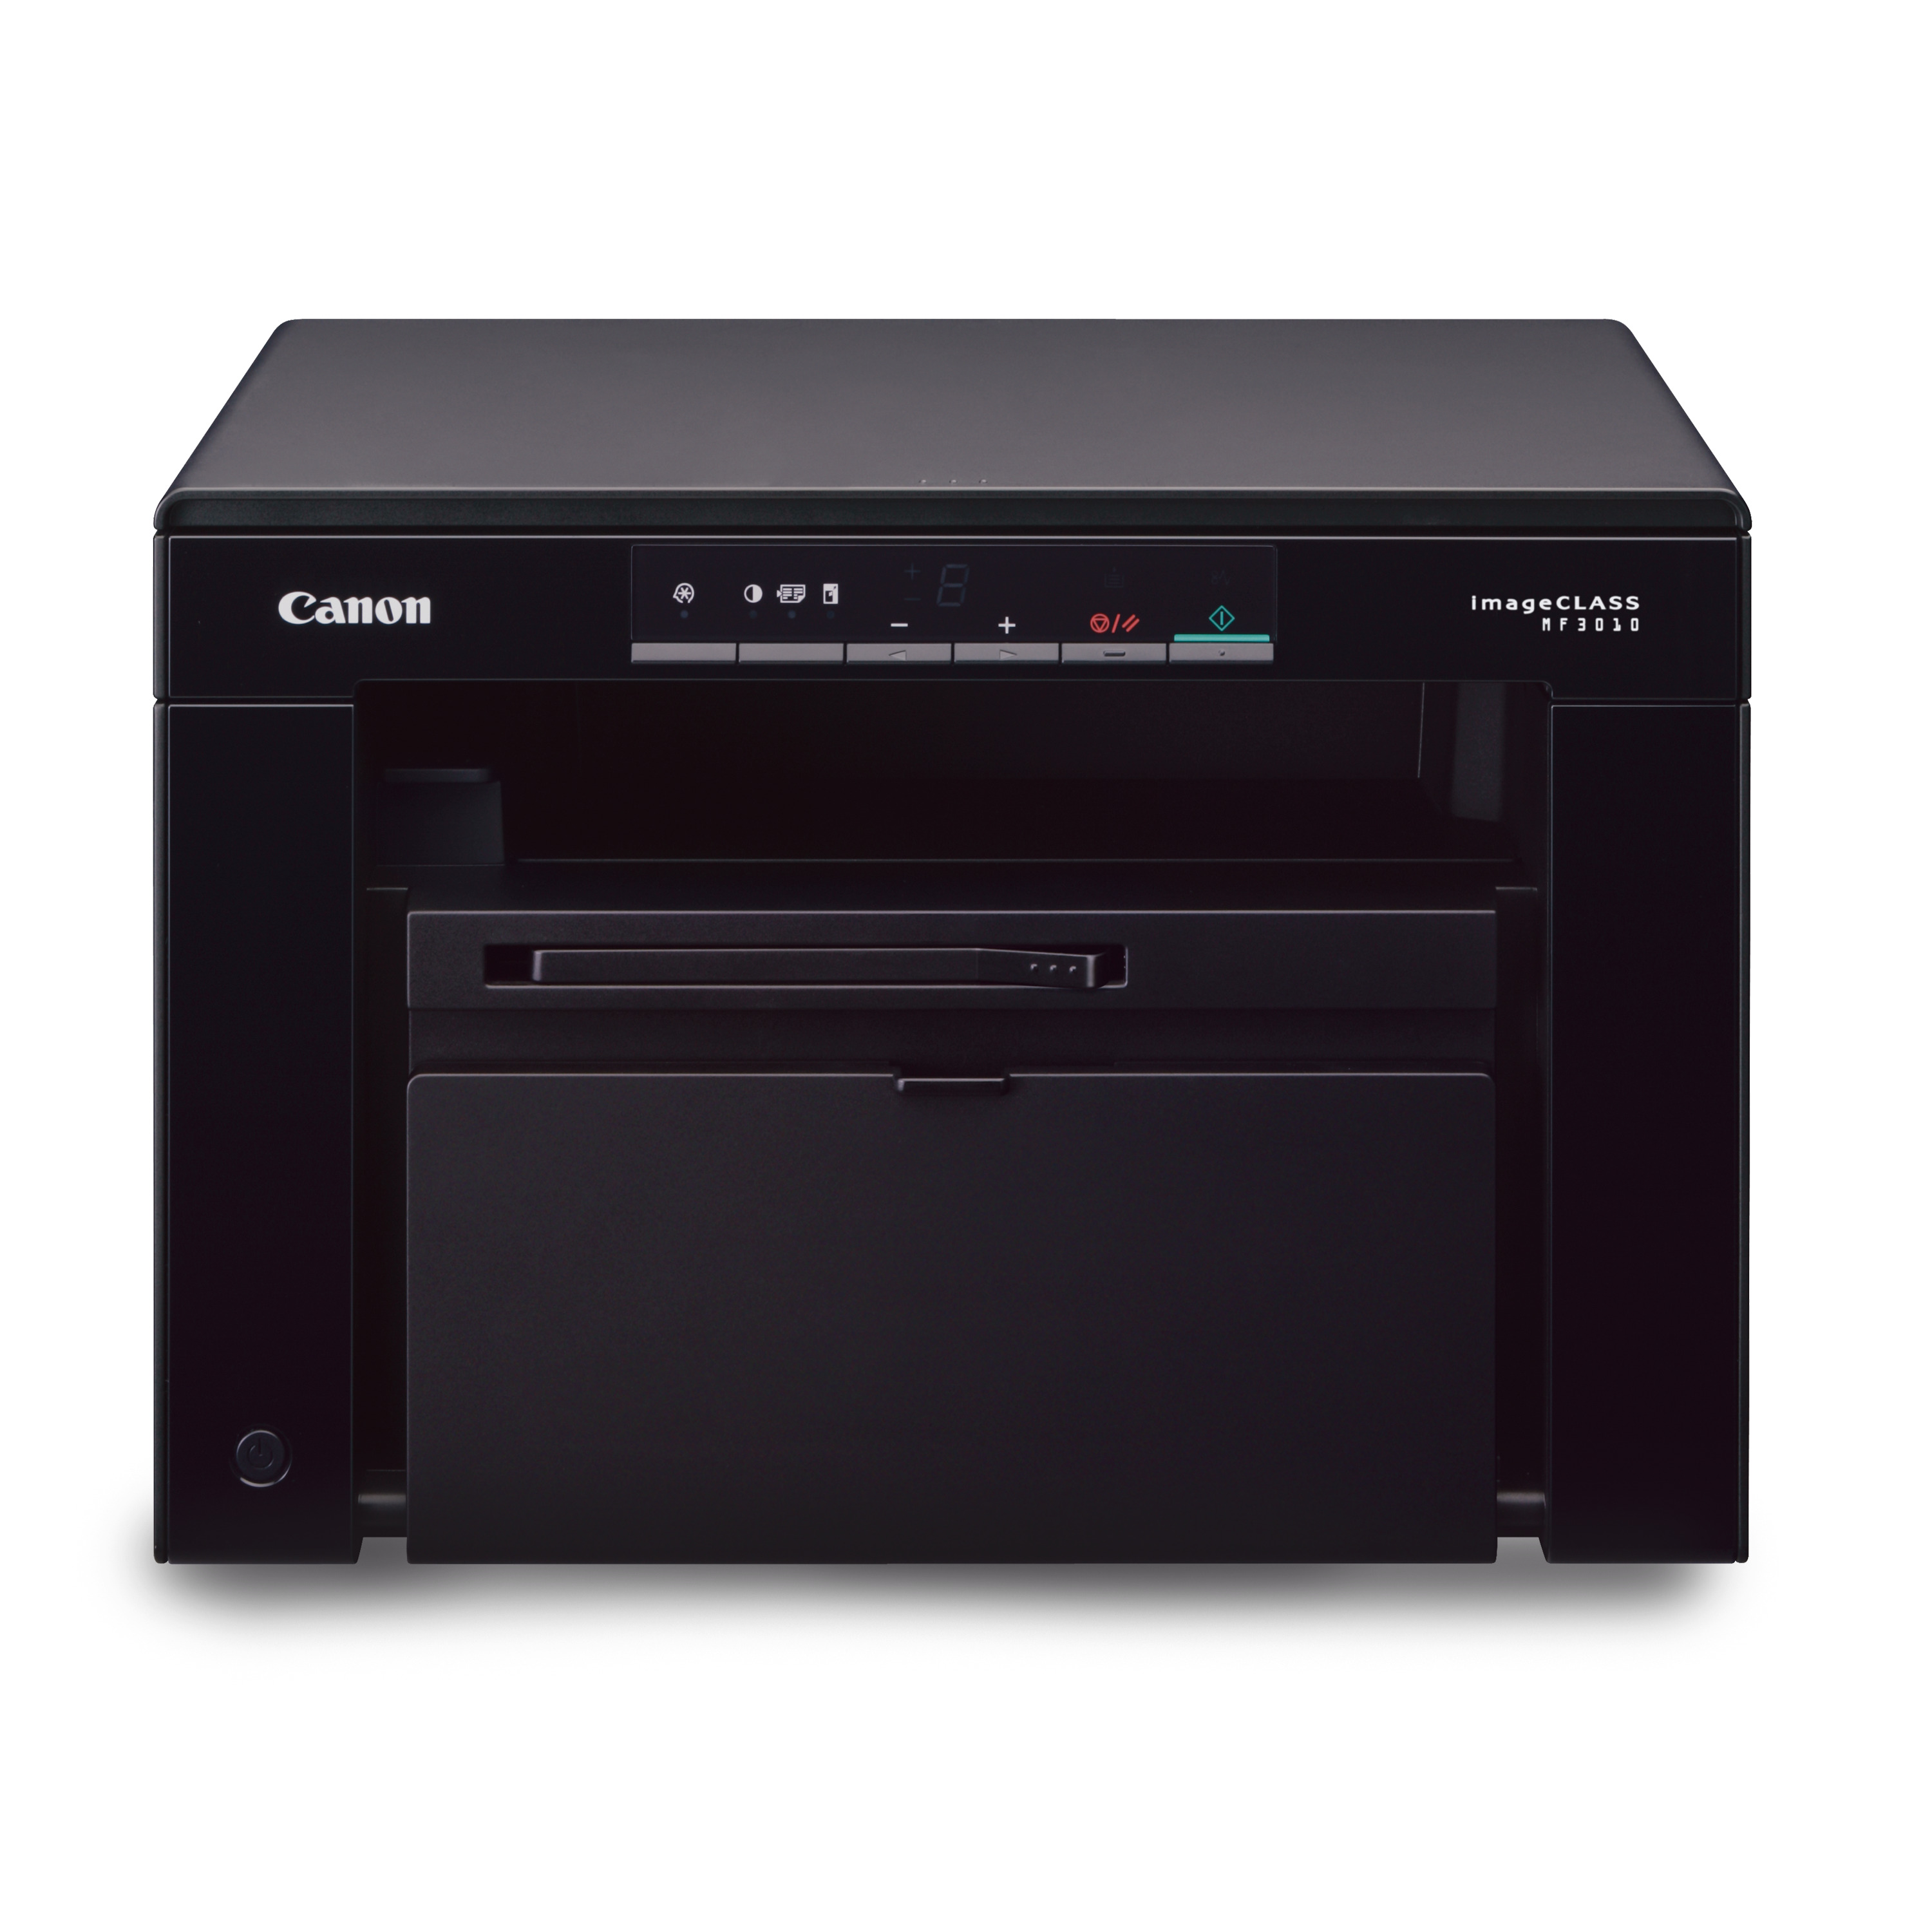 Canon imageCLASS MF3010 - Multifunction Laser Printer - image 3 of 9